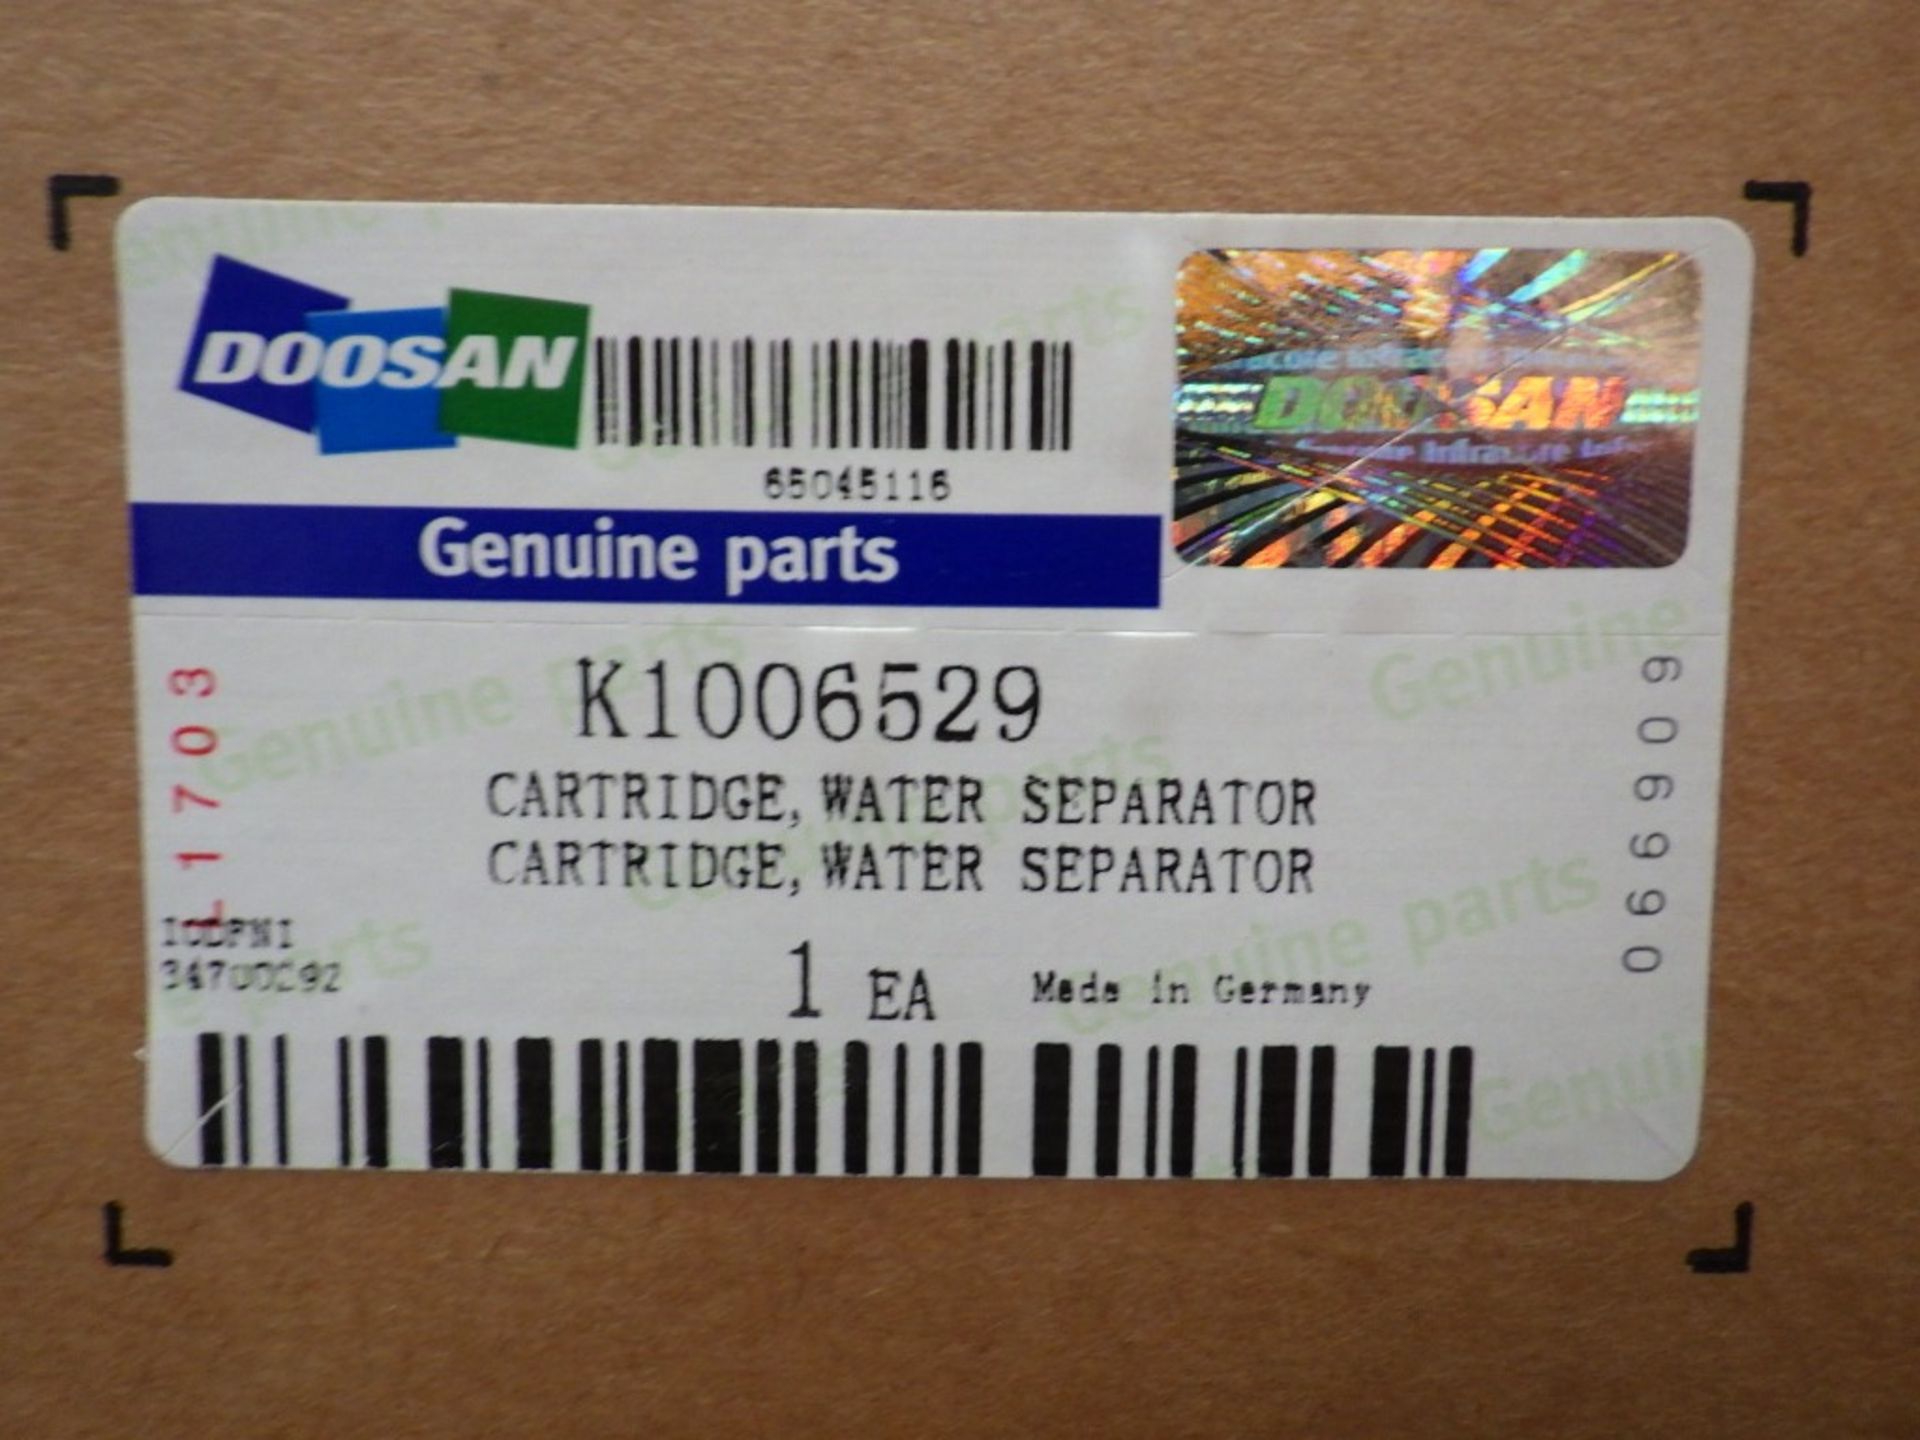 DOOSAN WATER SEPERATOR, CARTRIDGES TC. P/N: K1044607 (1 OF), 471-00082A (4 OF), K1006529 (19 OF) - Image 3 of 5